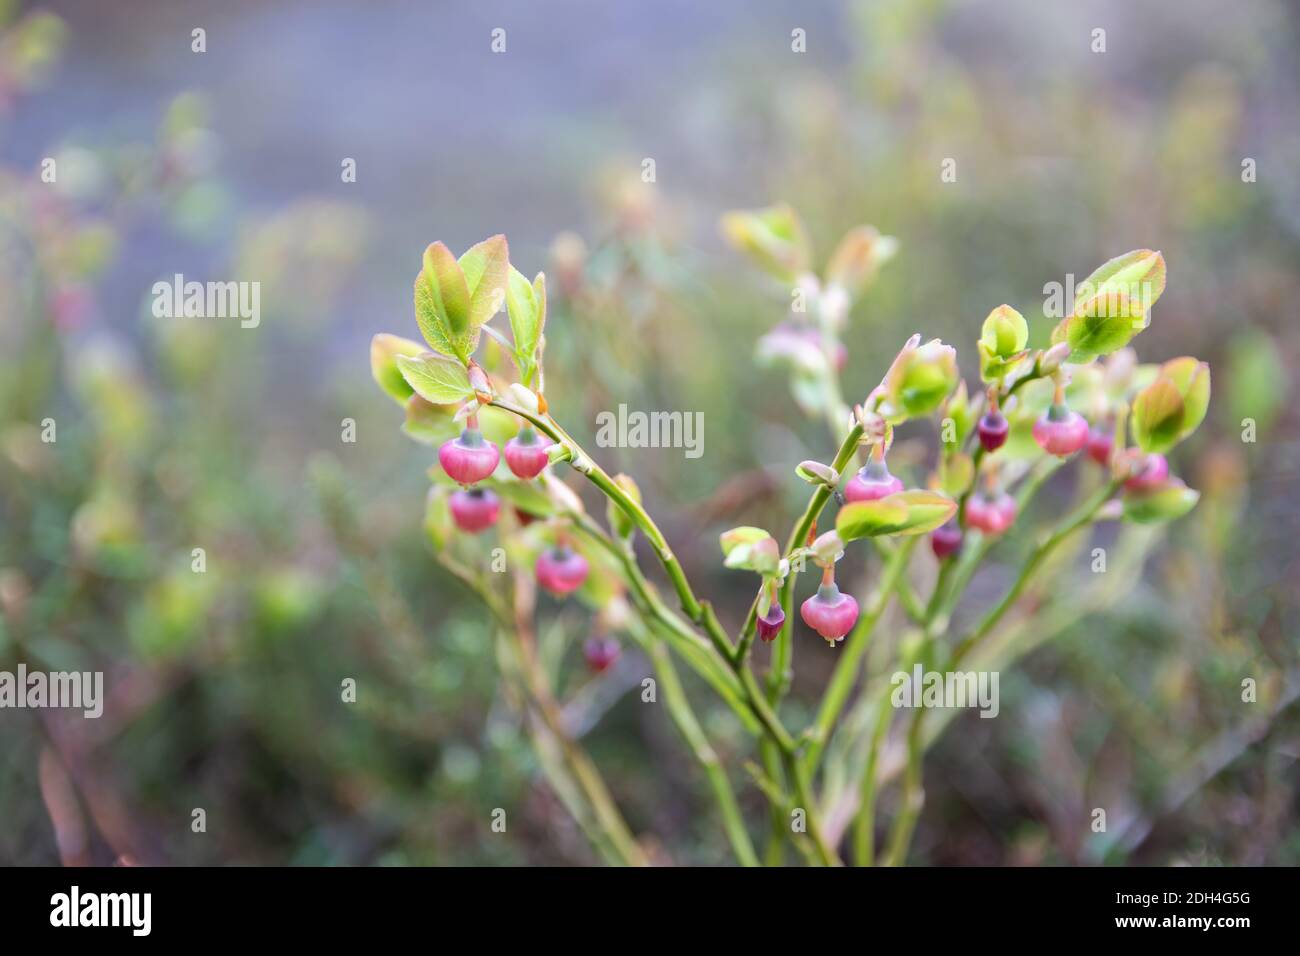 Preiselbeerbusch mit blassrosa Blüten in der Nähe Stockfoto